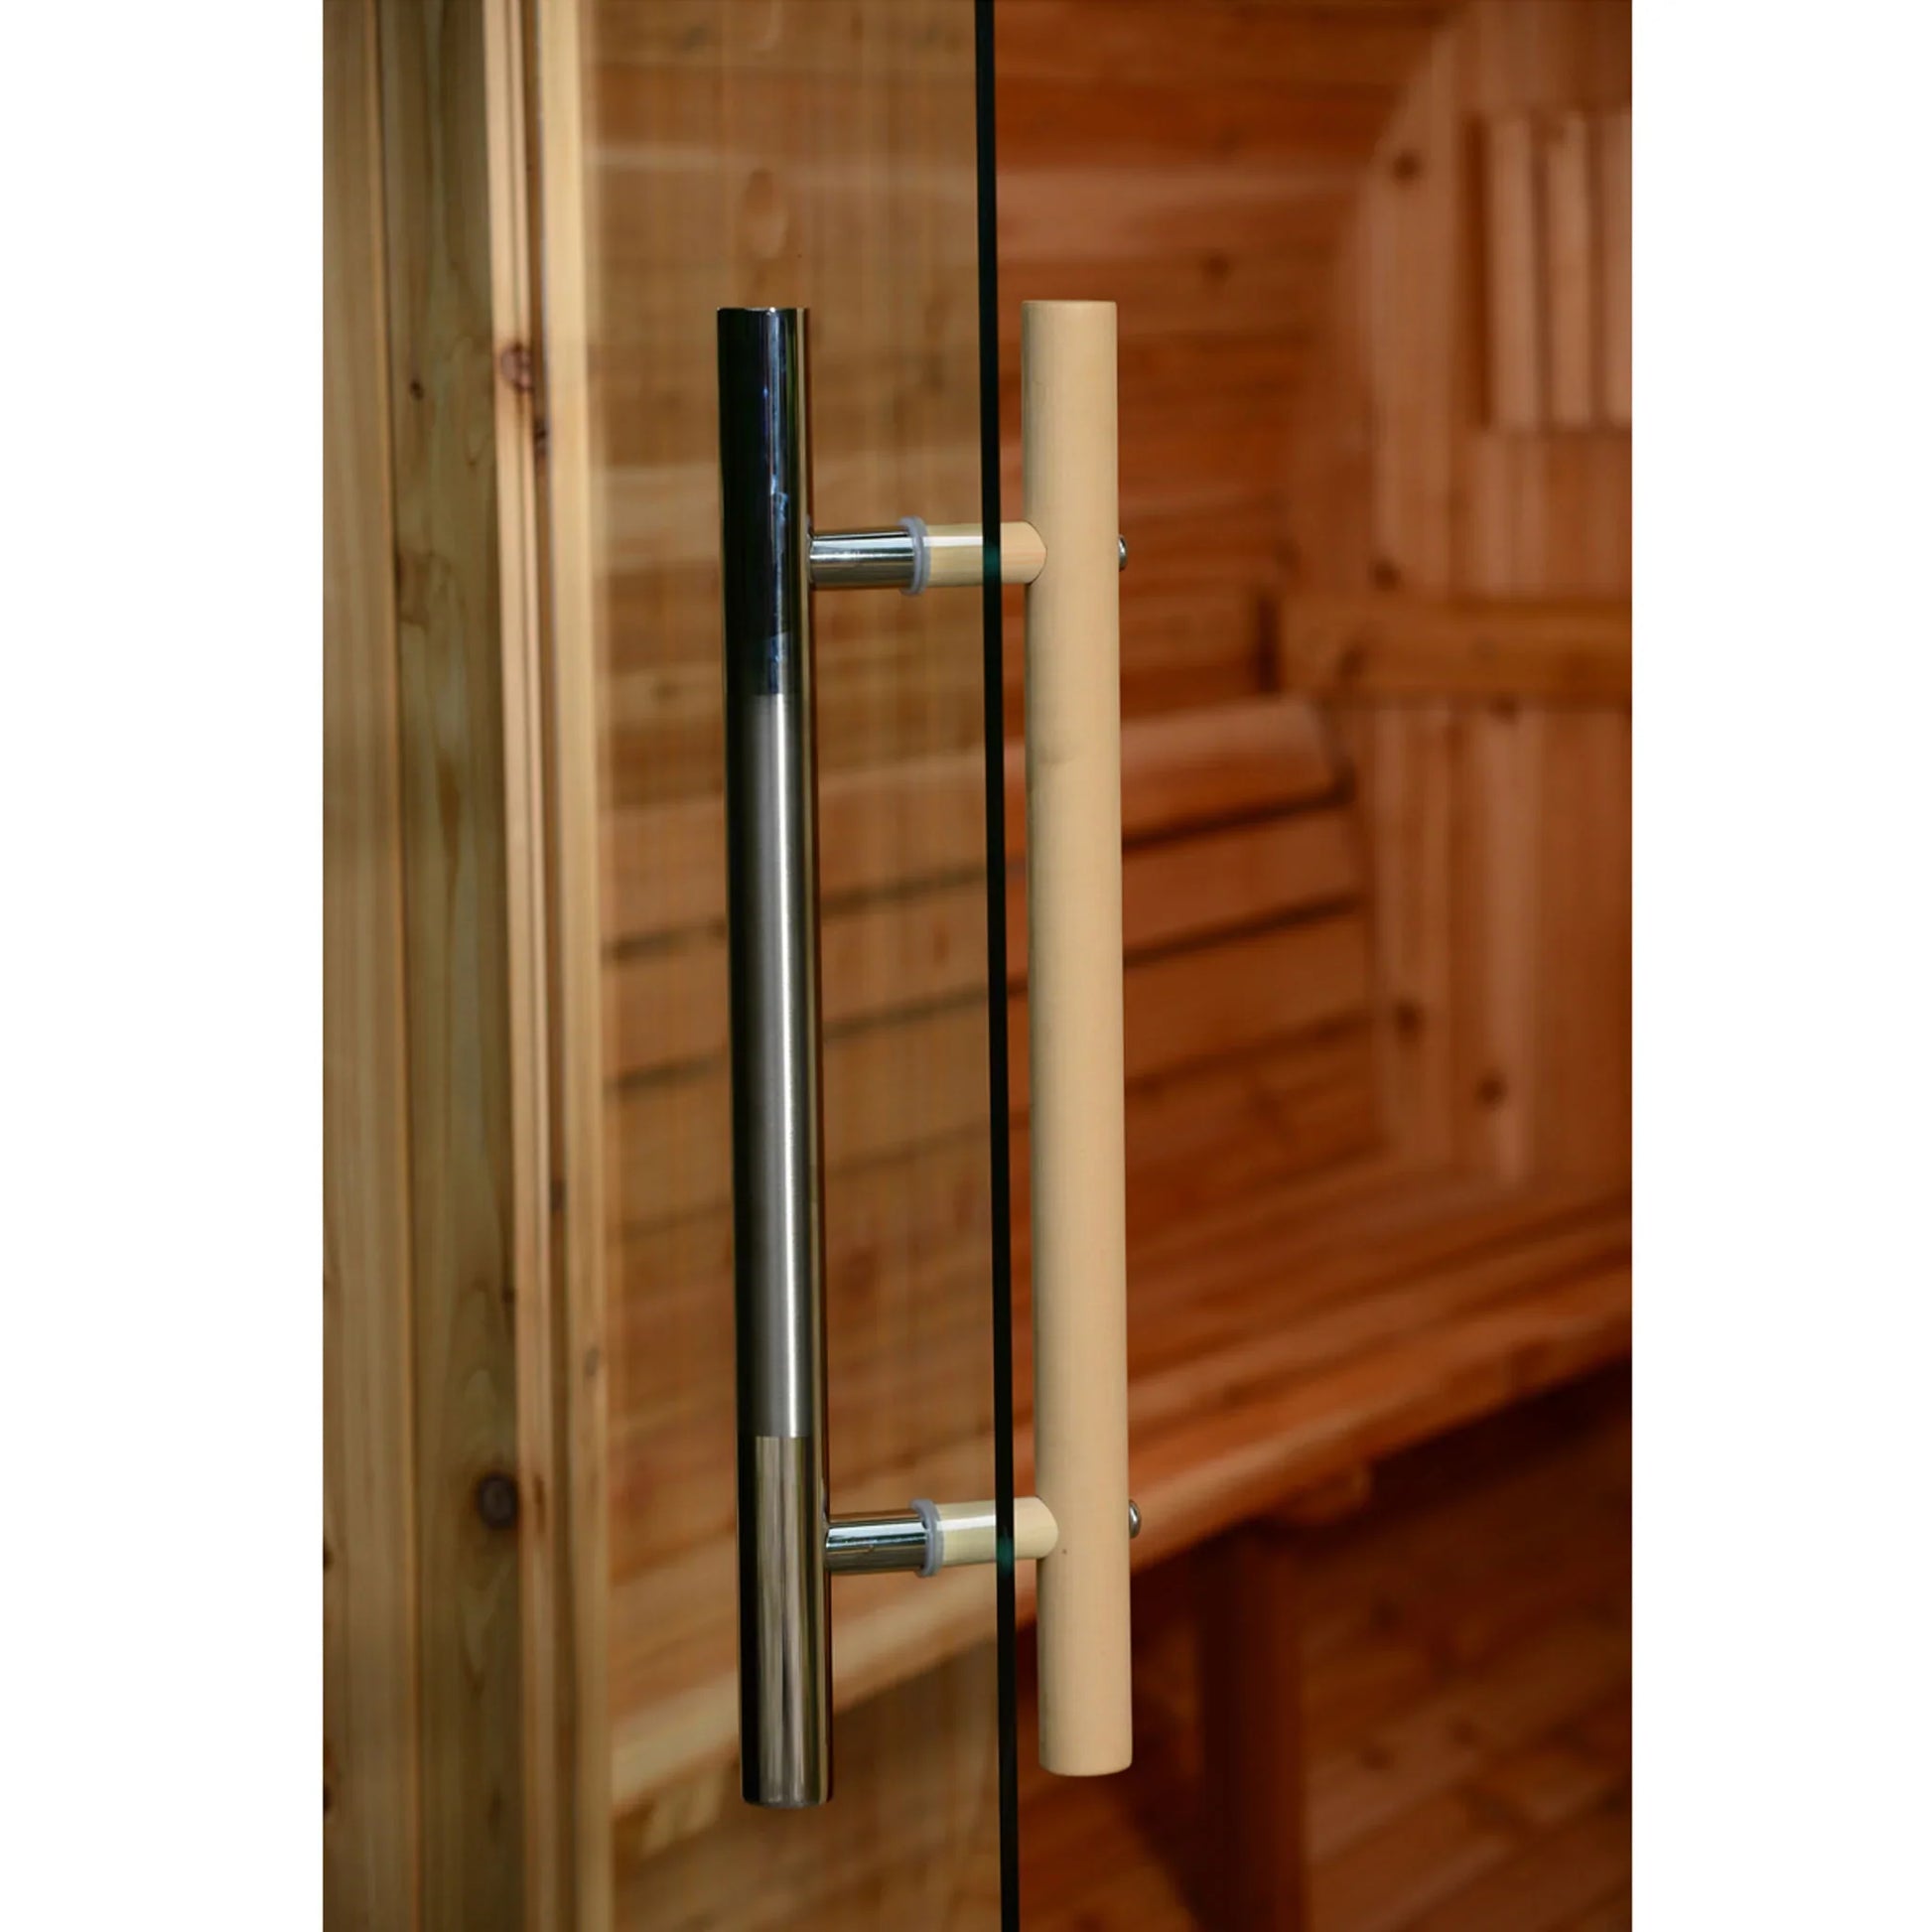 almost heaven saunas-wood barrel- barrel sauna- rustic cedar-outdoor sauna-audra-2 person-4 person-barrel detail door handle